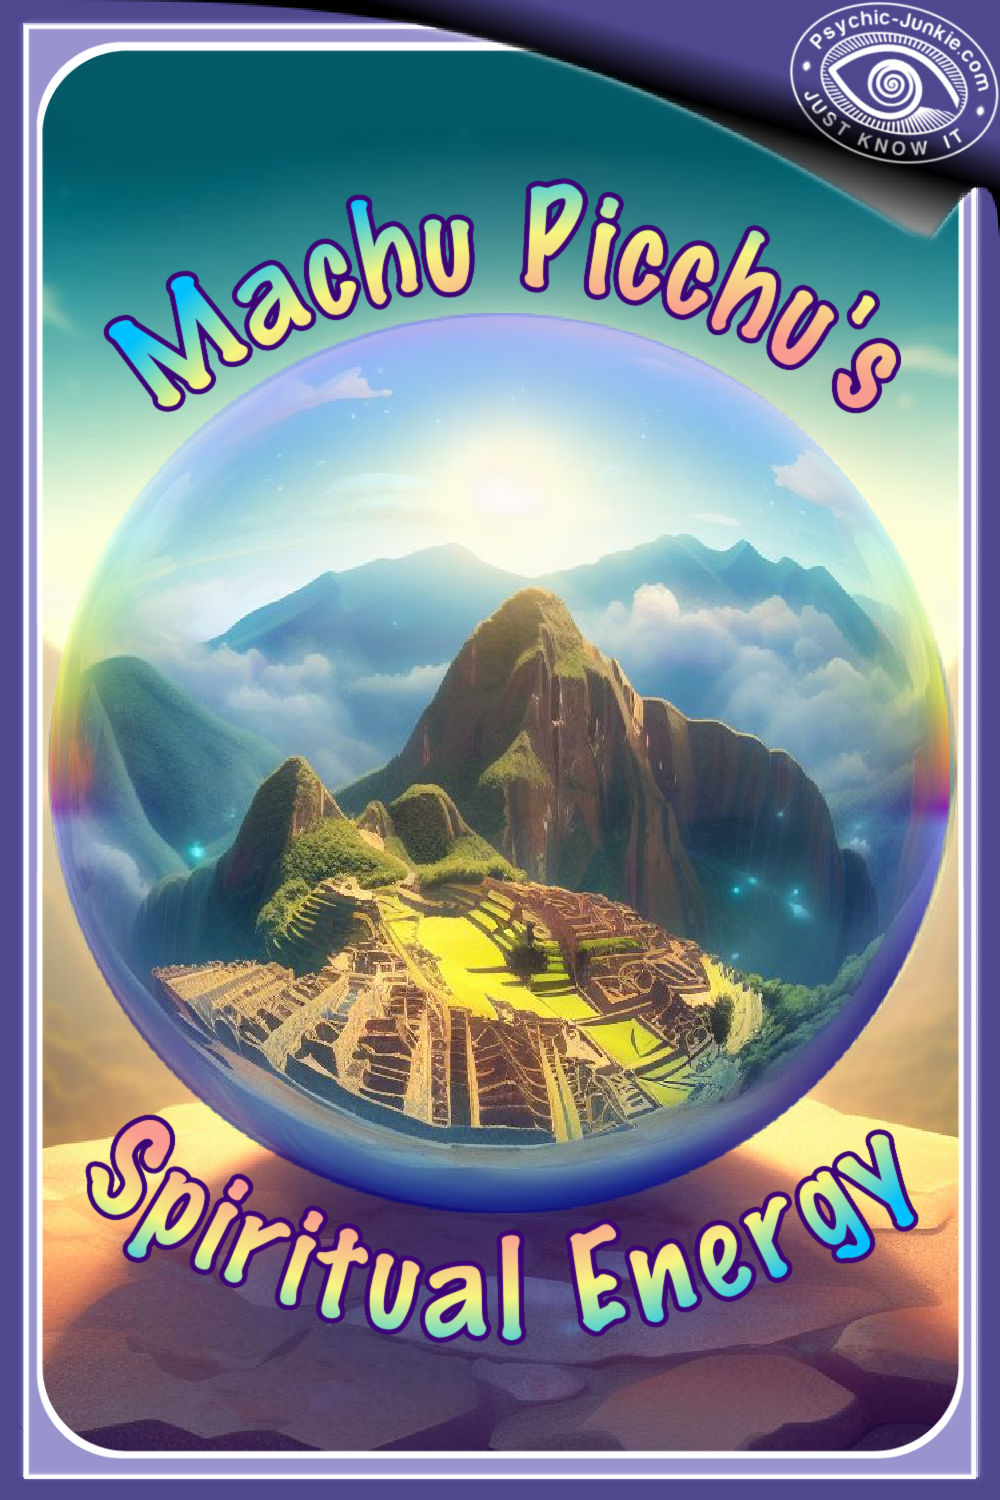 Machu Picchu's Spiritual Energy